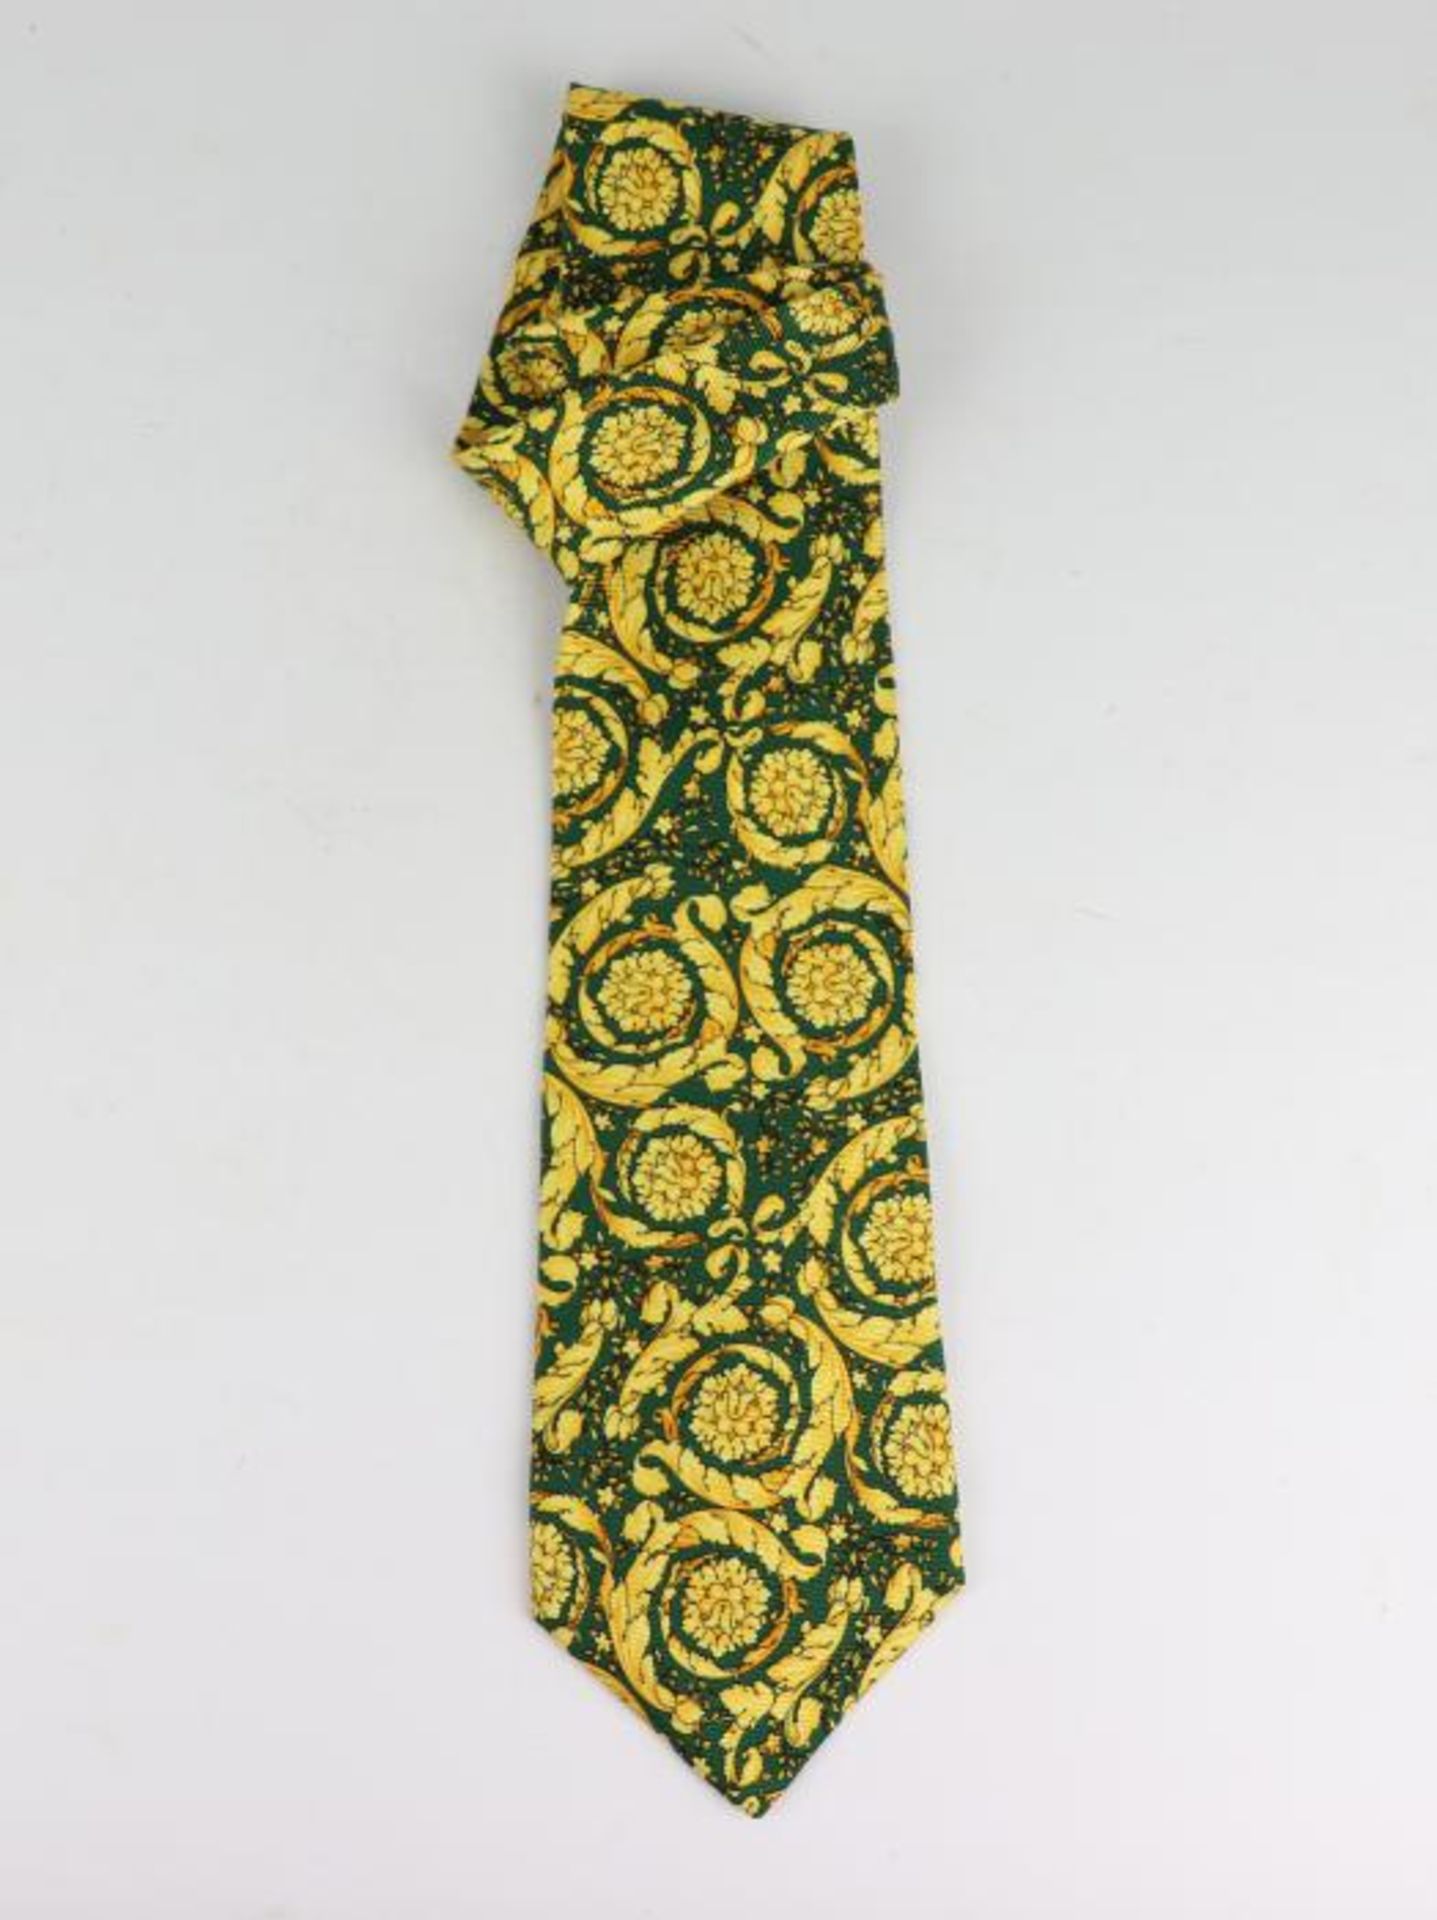 Versace - KrawatteGianni Versace, 100 % Seide, grün, gold, gerollte Akanthusmotive, min. Alterssp.